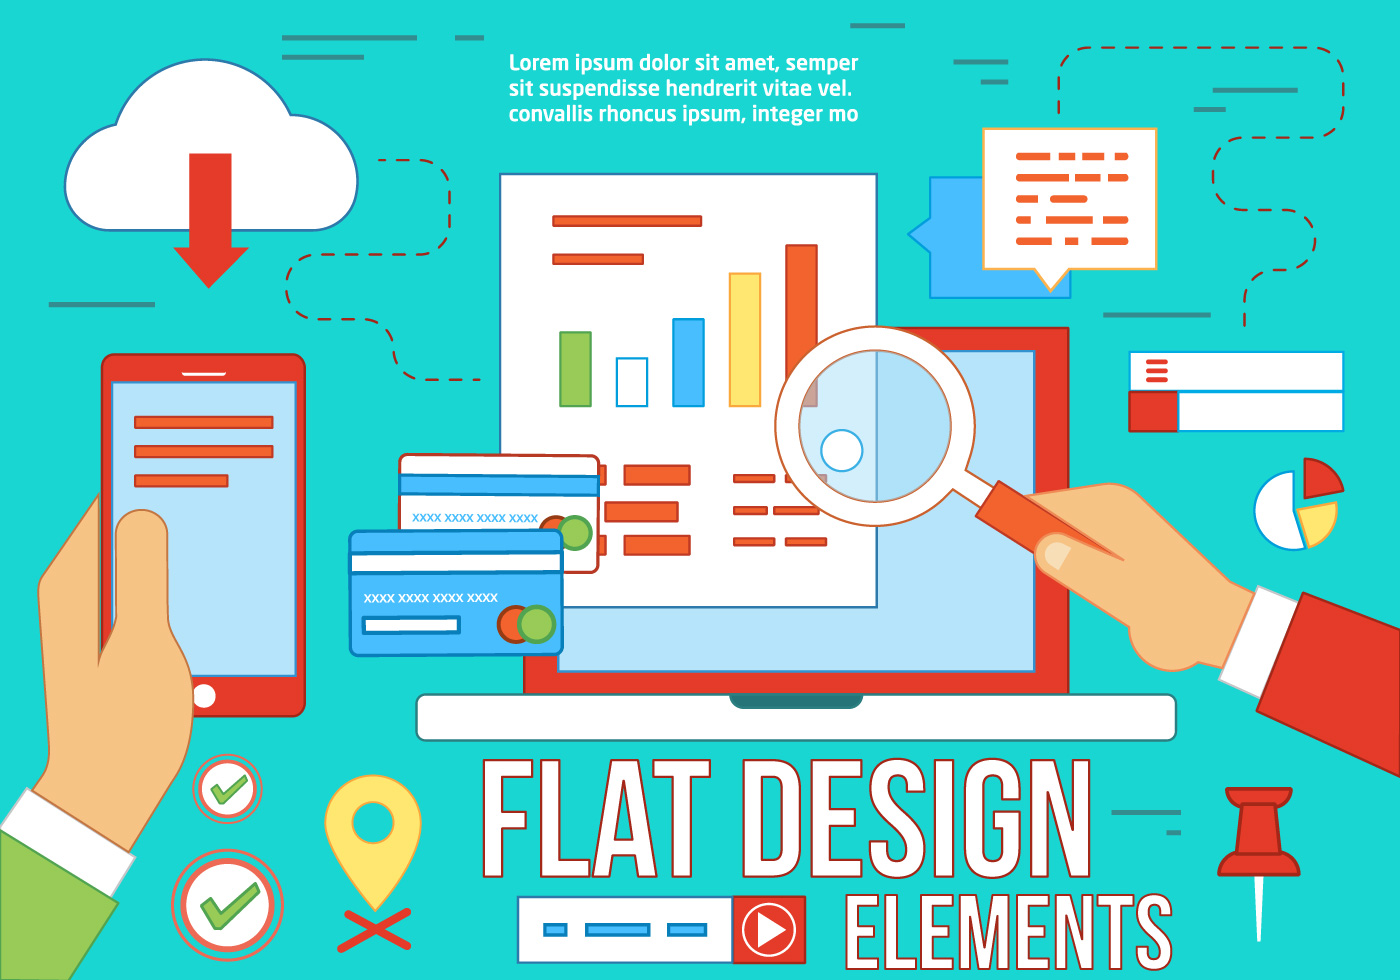 Download Free Flat Design Vector Elements - Download Free Vector ...